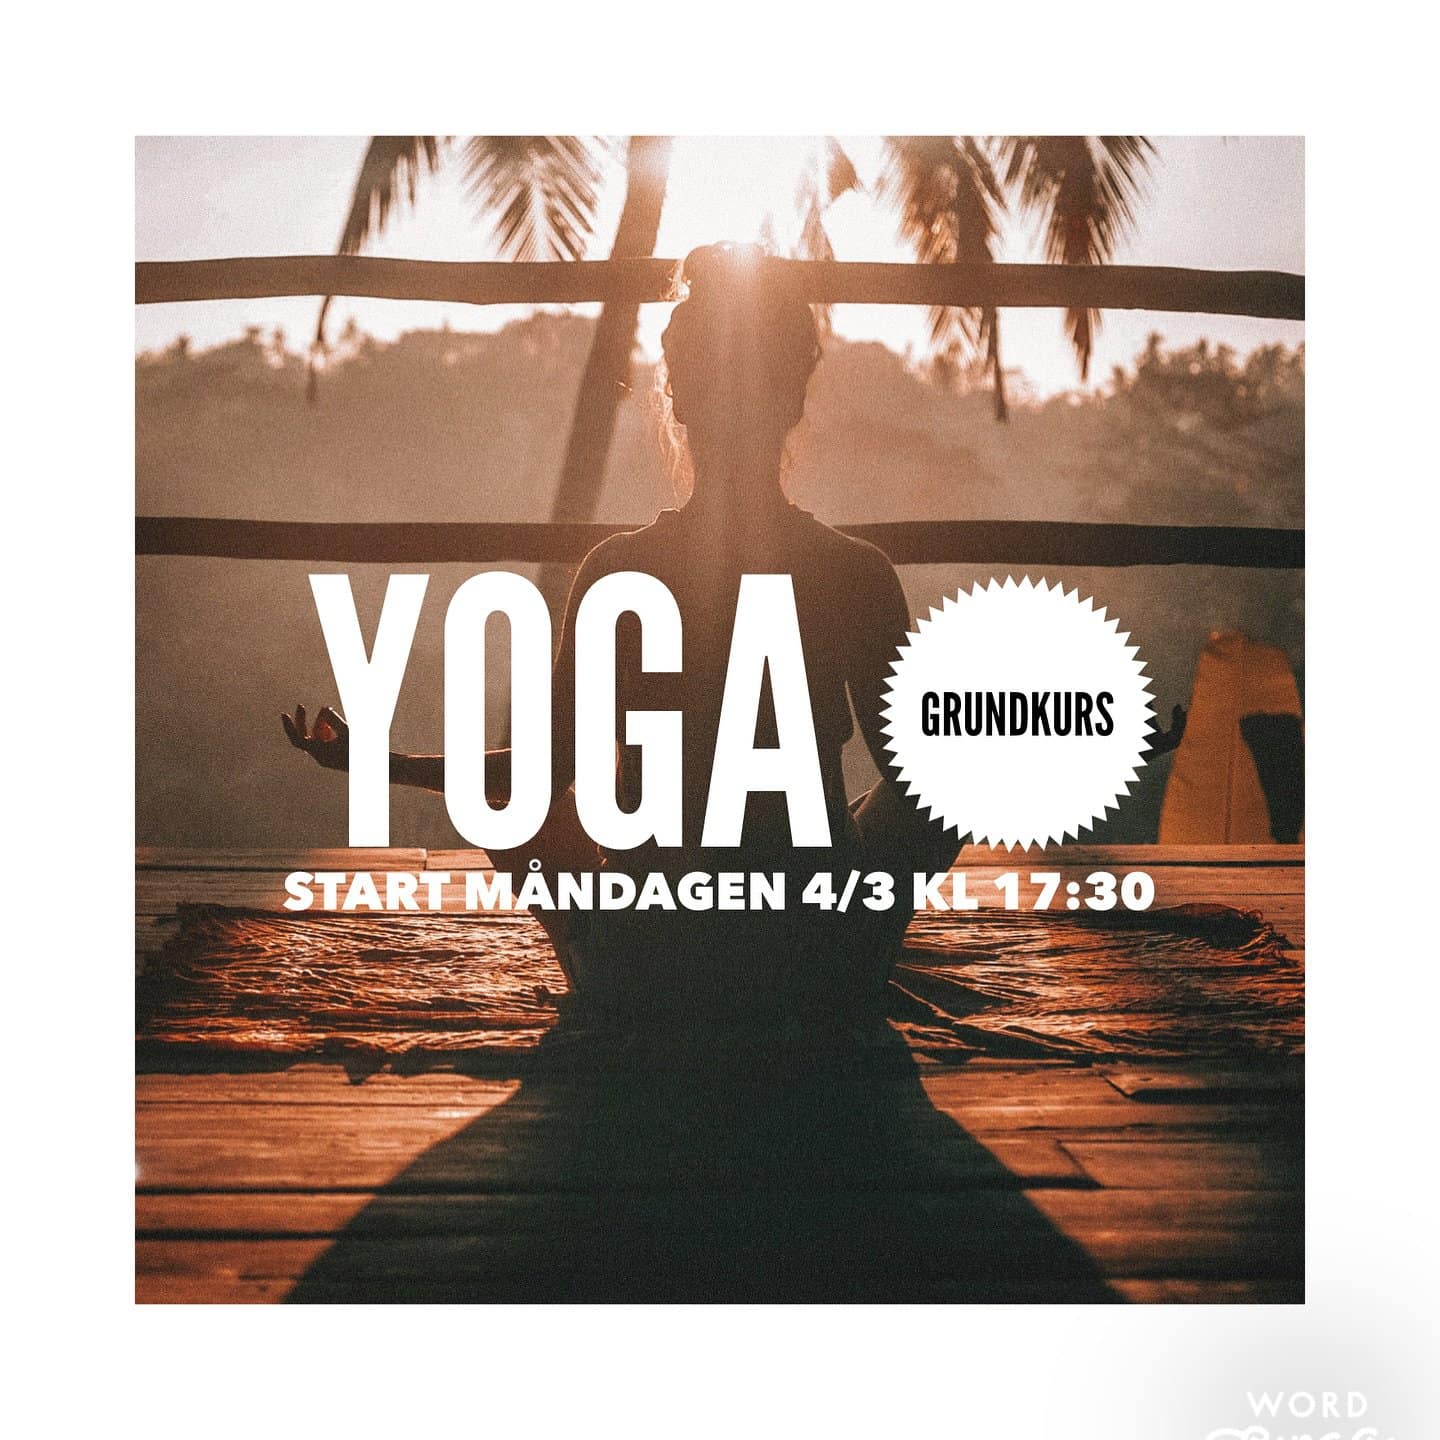 Yoga Grundkurs 7 veckor Måndagen 4 mars kl.17:30-19:00 Freemove Yogastudio